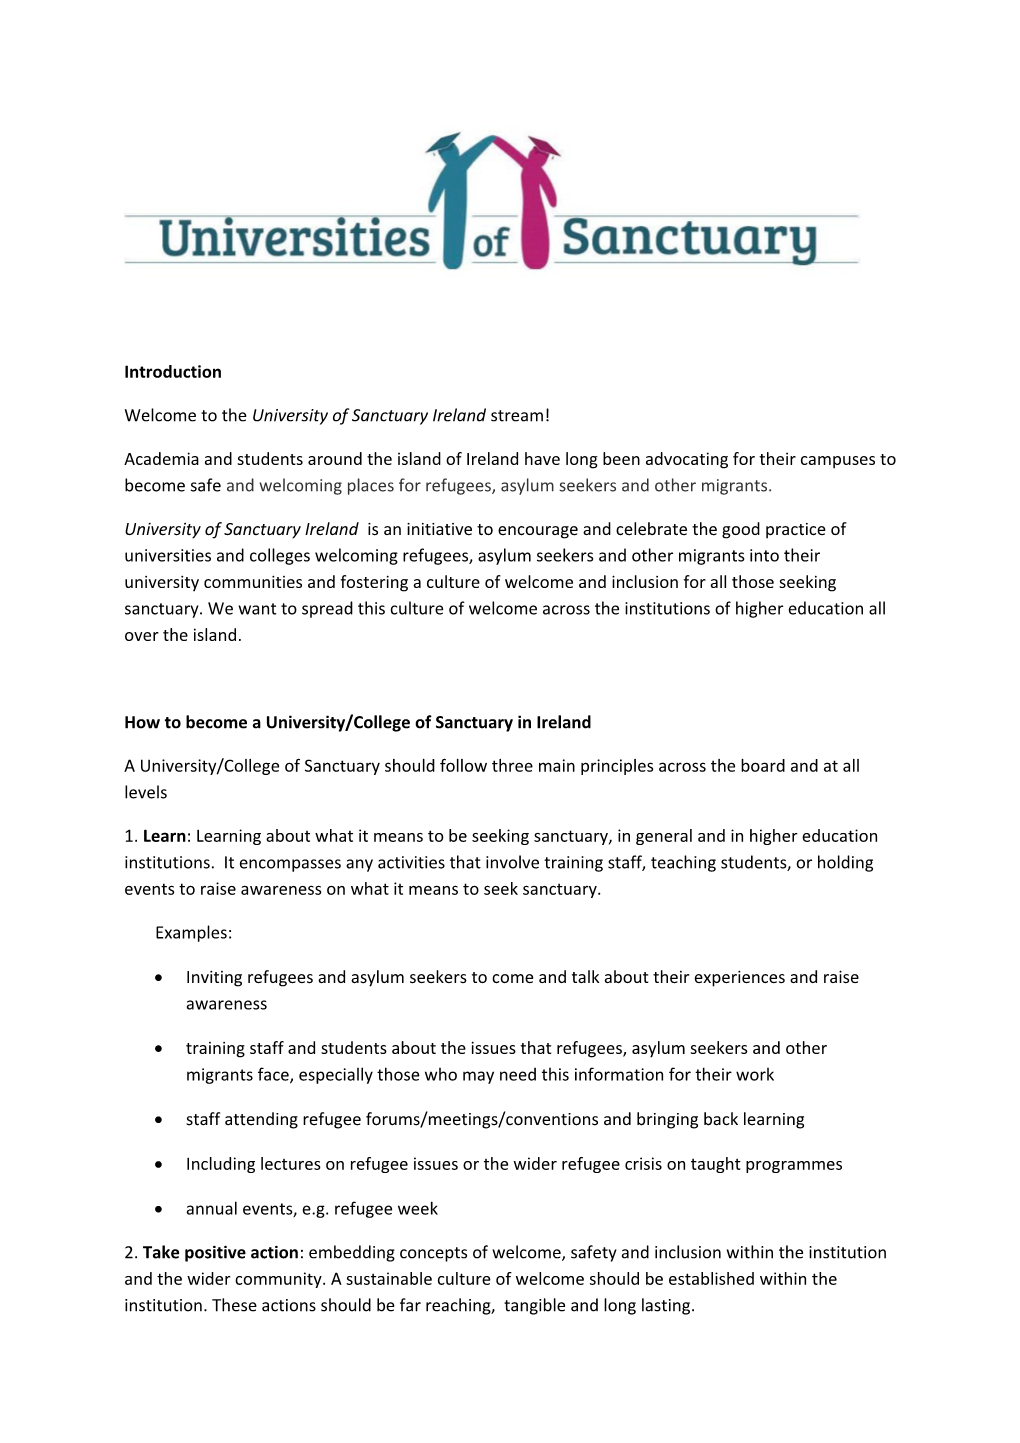 Welcome to the University of Sanctuary Ireland Stream!